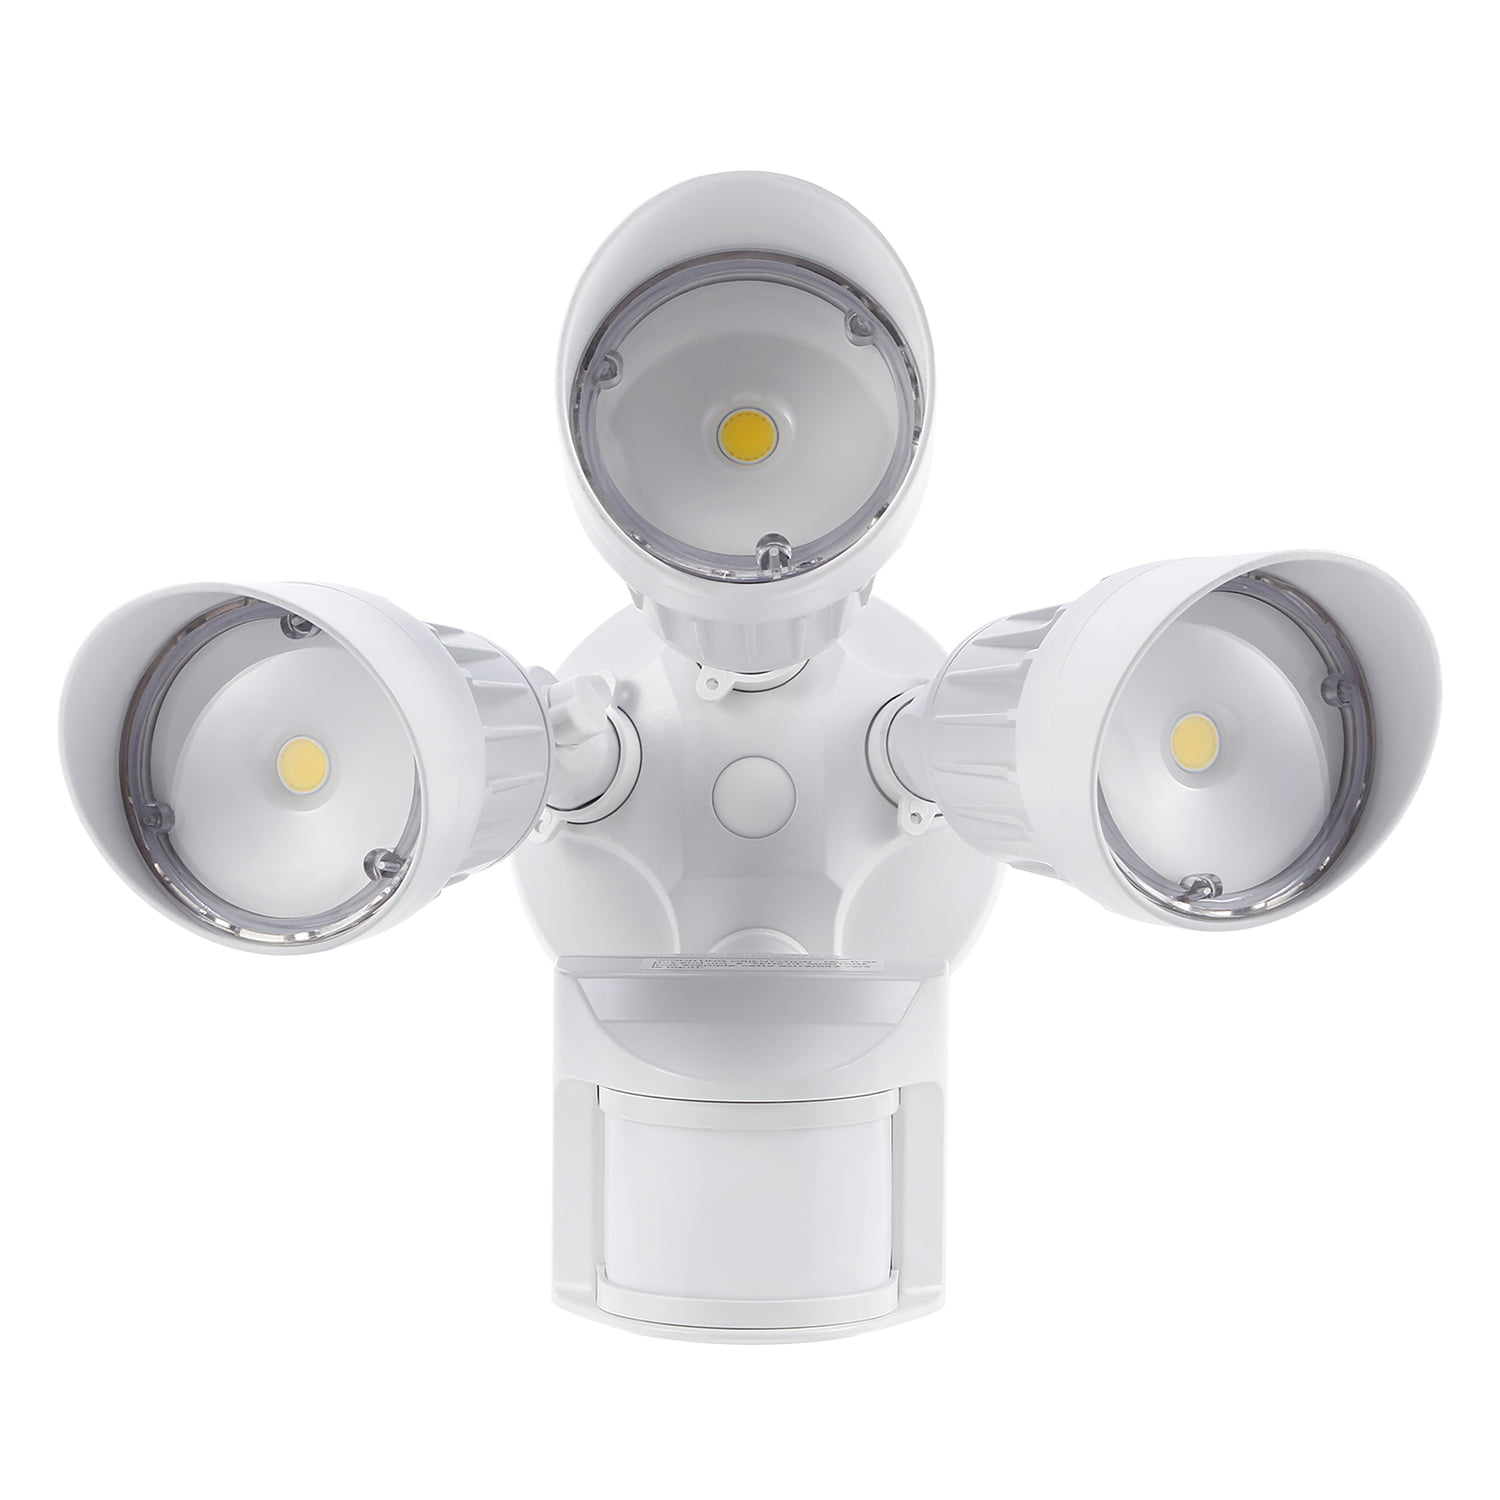 LEONLITE 30W 3-Head LED Security Lights, Outdoor Motion Sensor Security